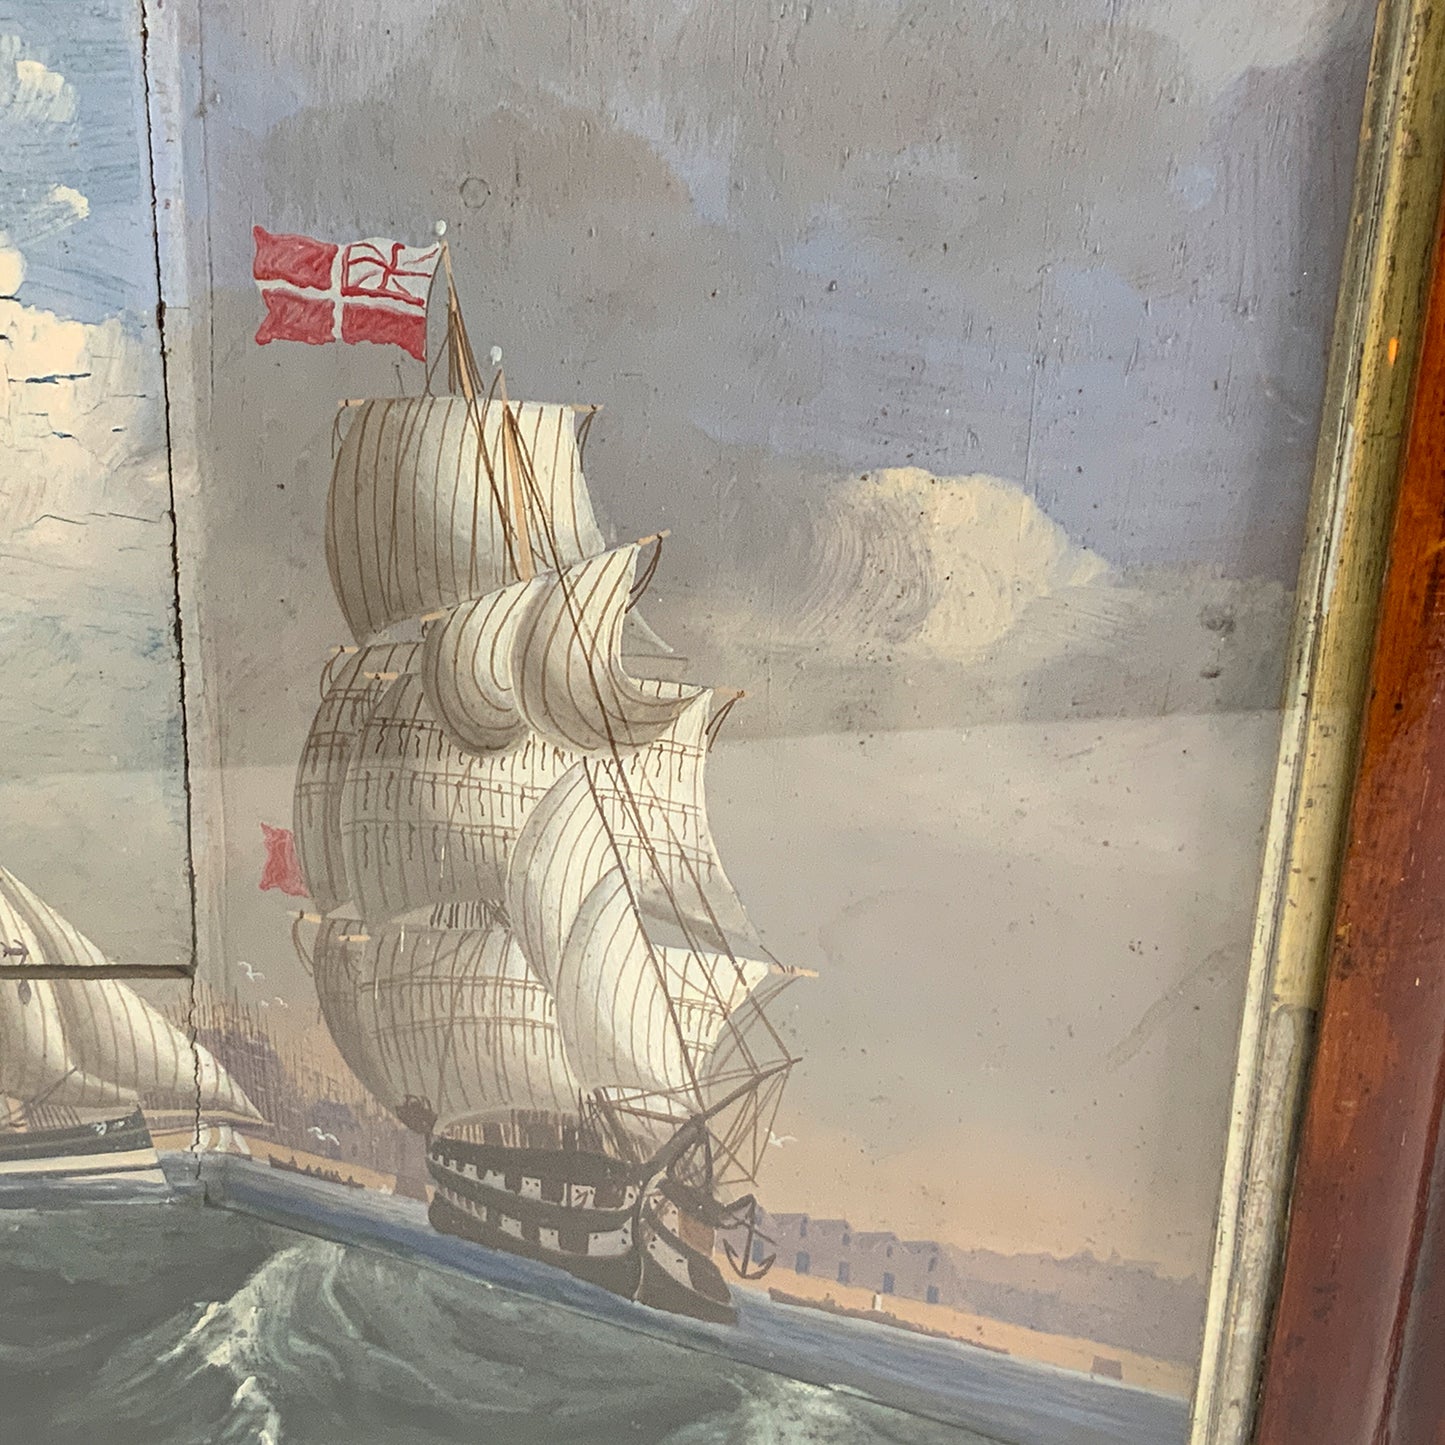 Rare And Important English Shadow Box Model Of A Full-Rigged Ship - Lannan Gallery